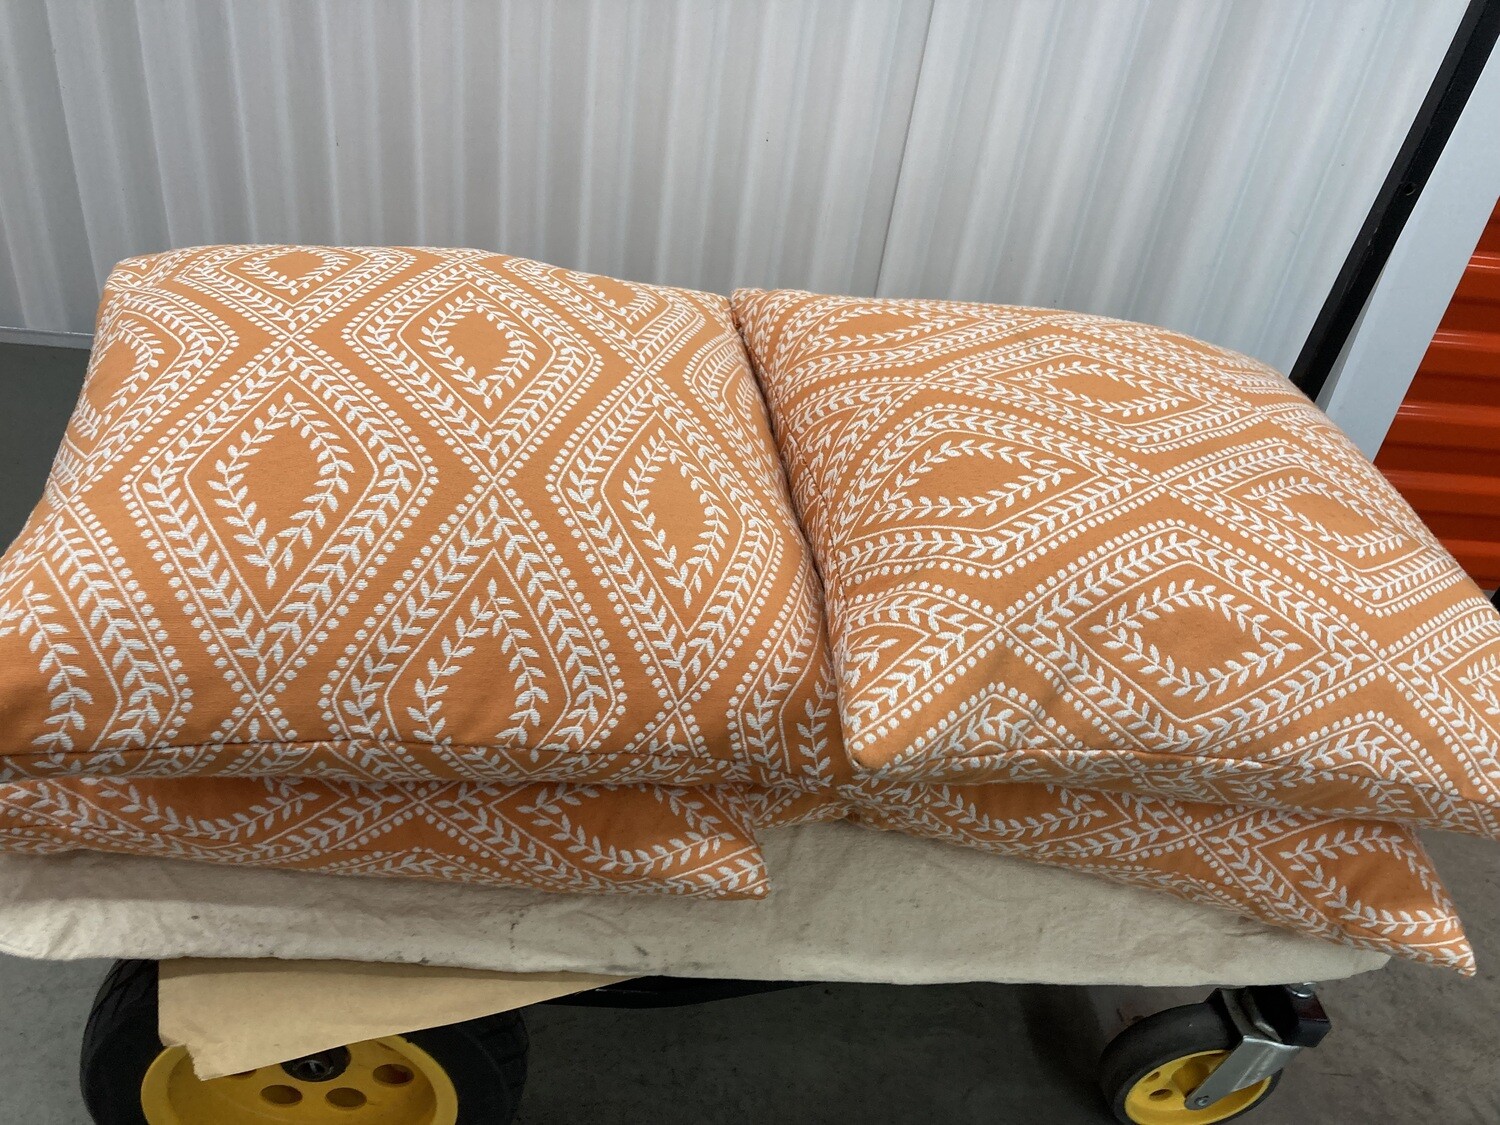 4 Orange & White Down-filled Pillows - New Condition! #2314